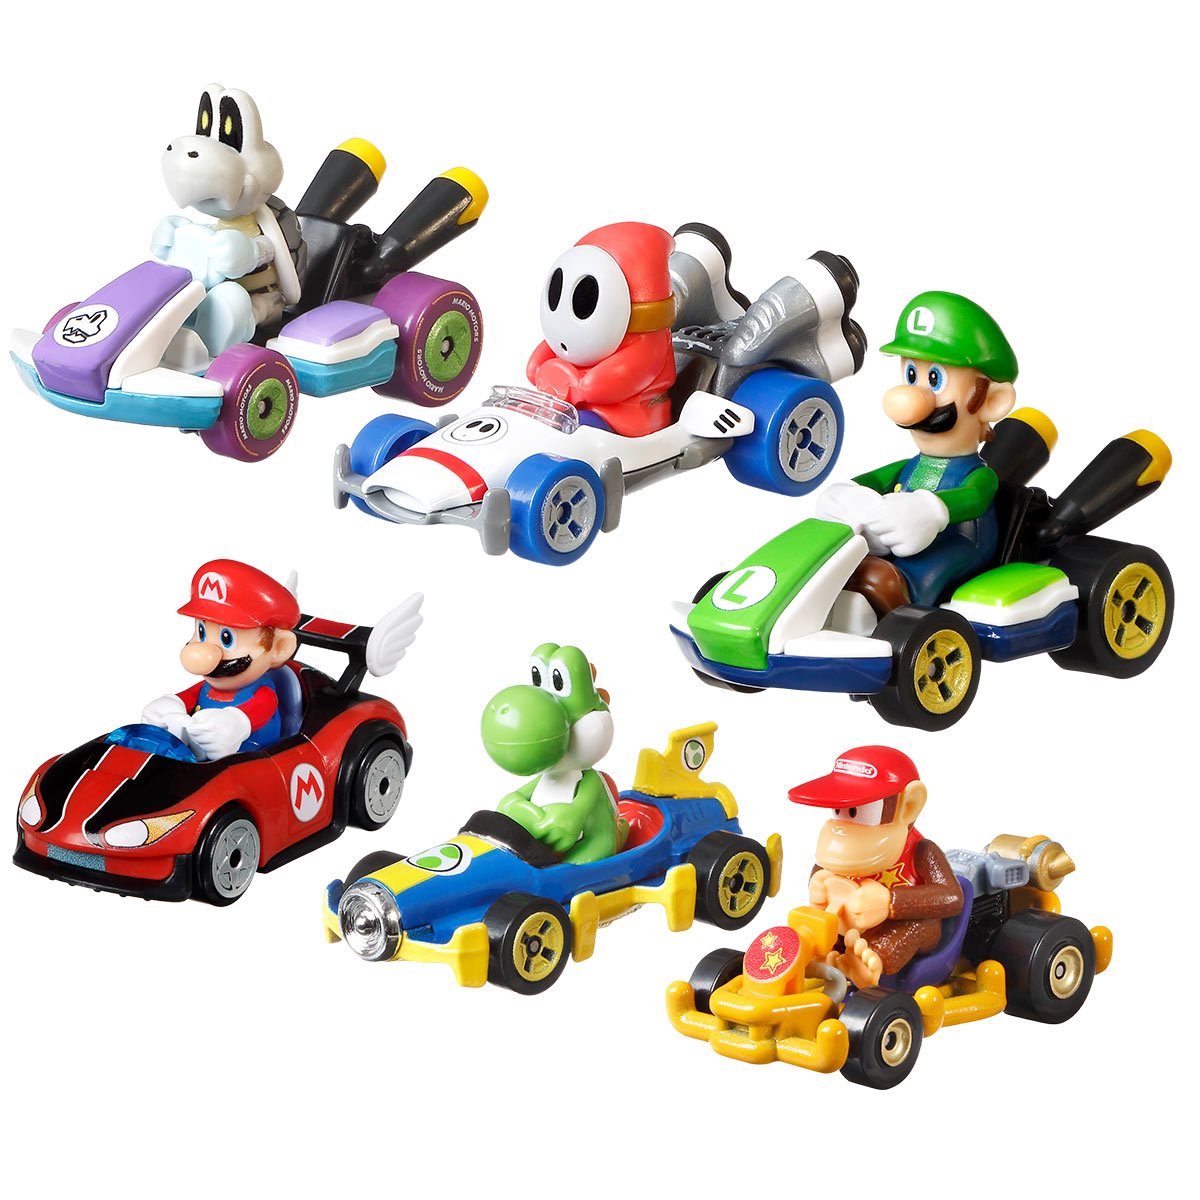 Mario Kart Hot Wheels Mix 4 2021 Vehicle Case.